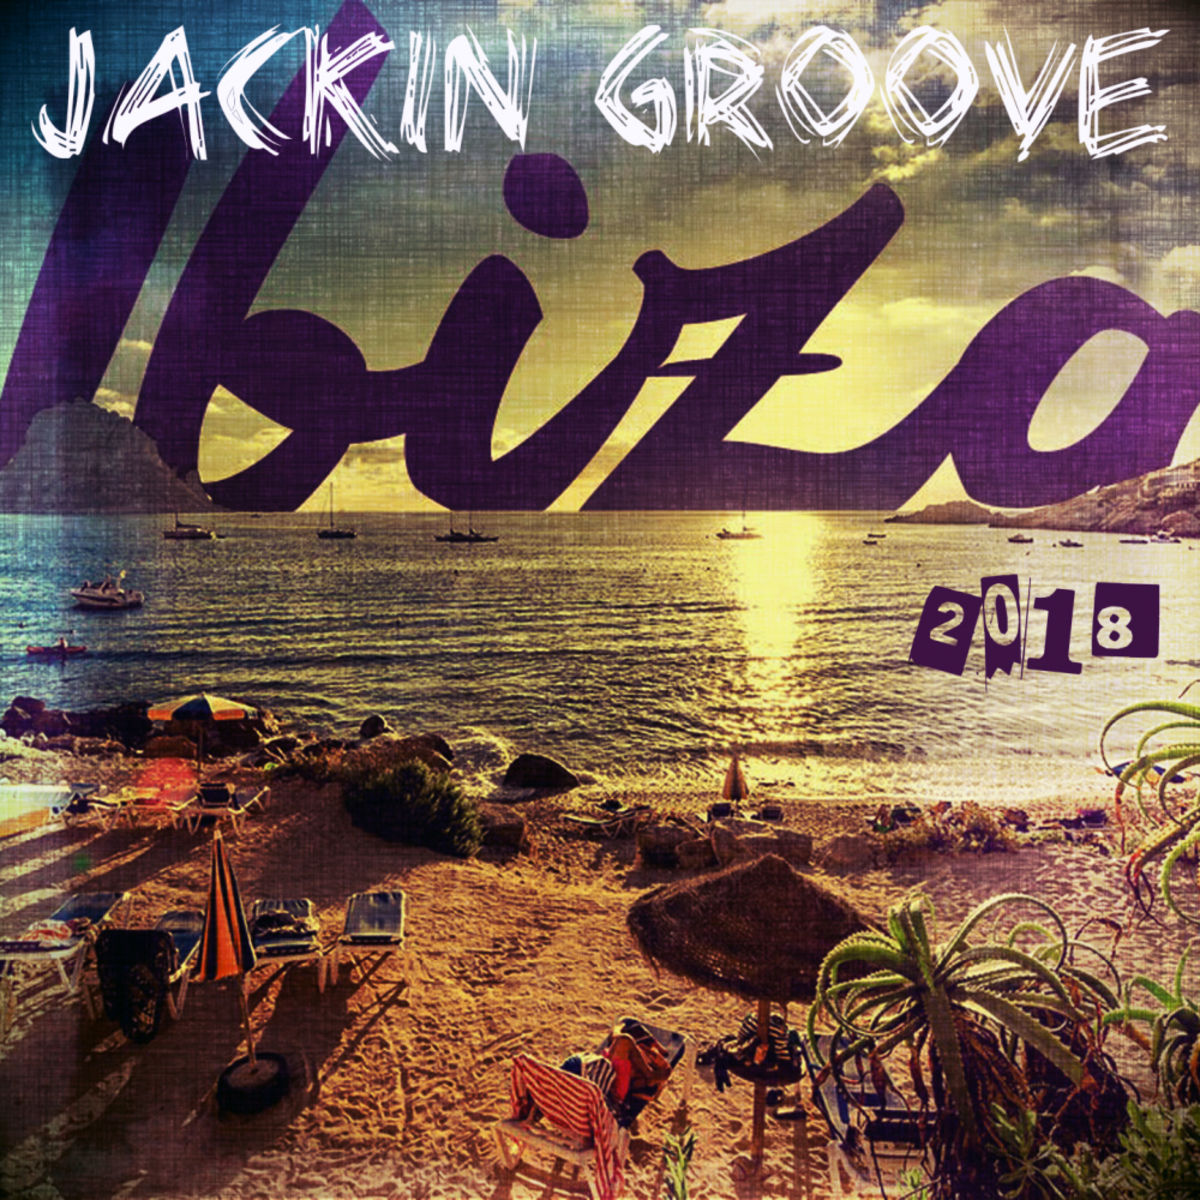 VA - Jackin' Groove In Ibiza 2018 / Digital Imprint Trax